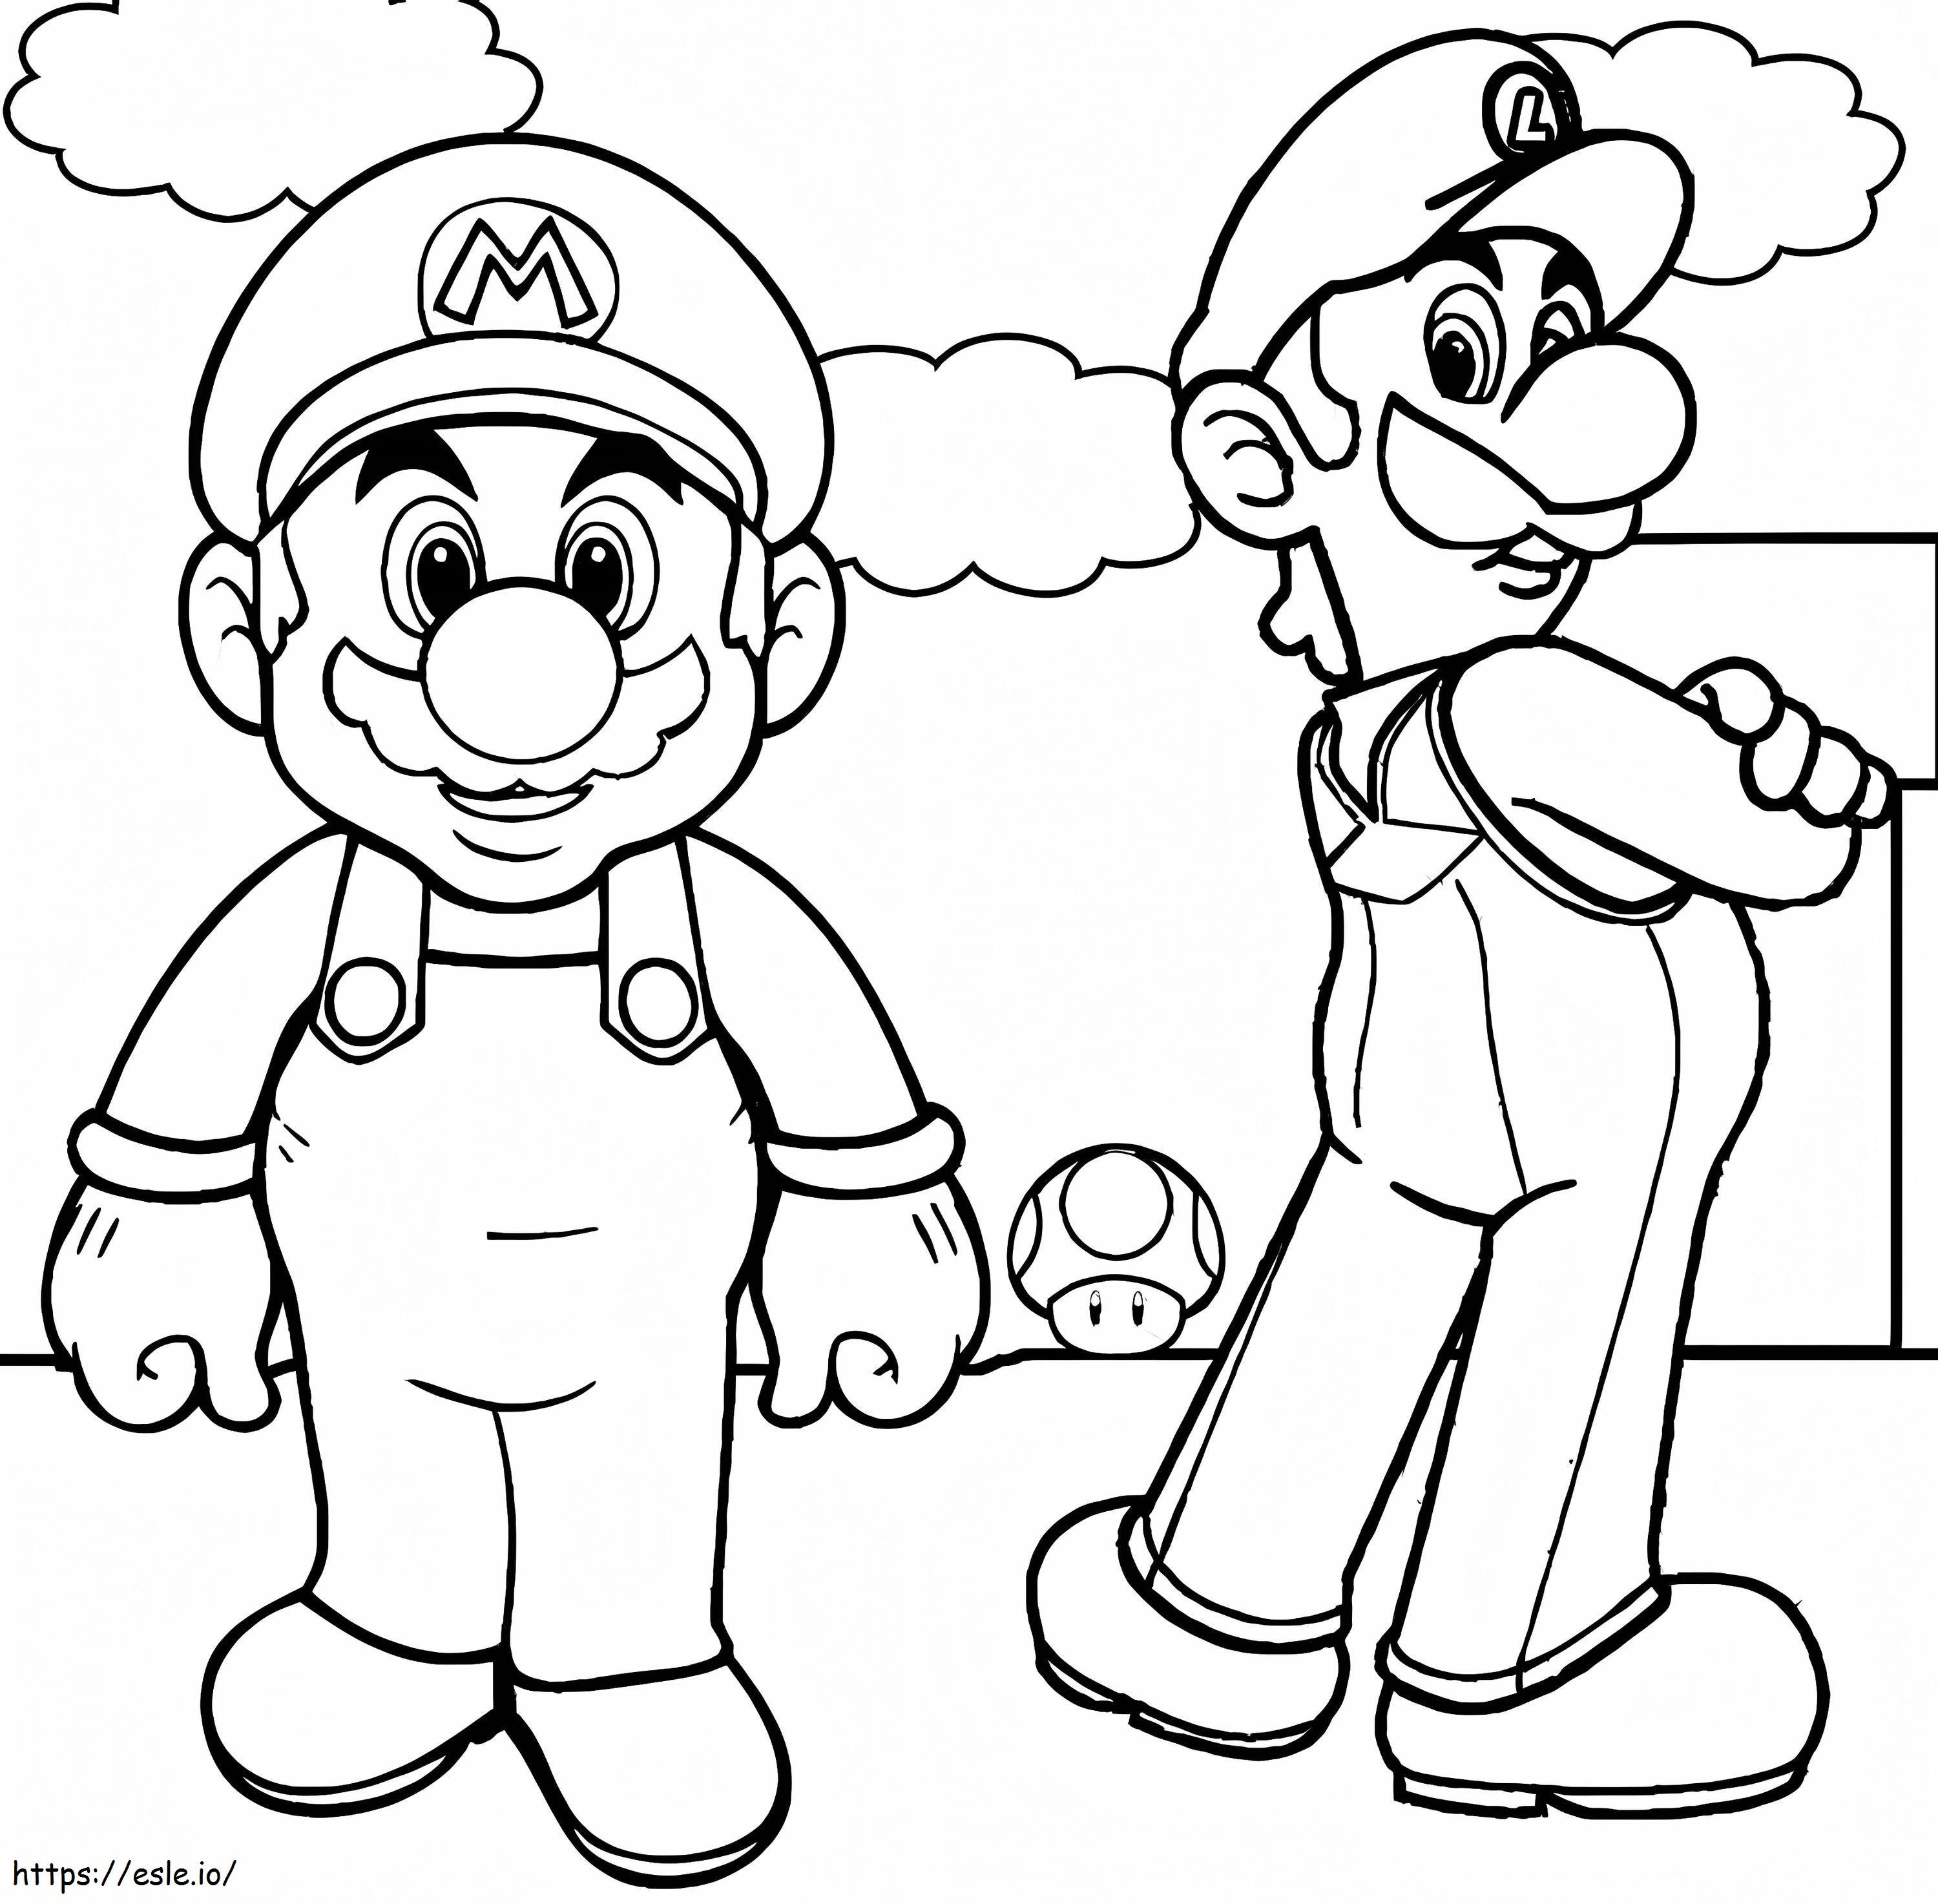 Luigi Basico i Mario kolorowanka